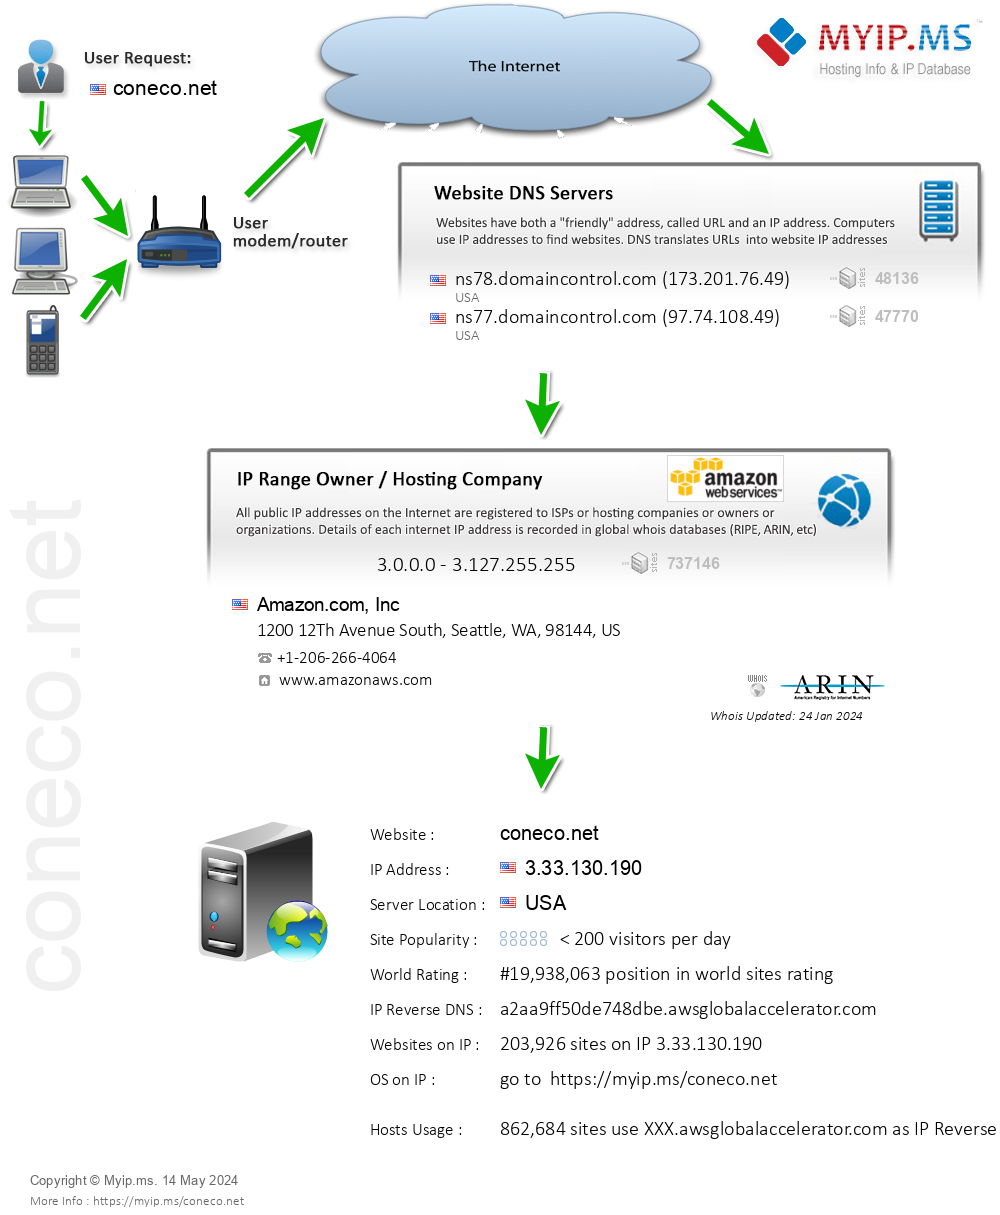 Coneco.net - Website Hosting Visual IP Diagram